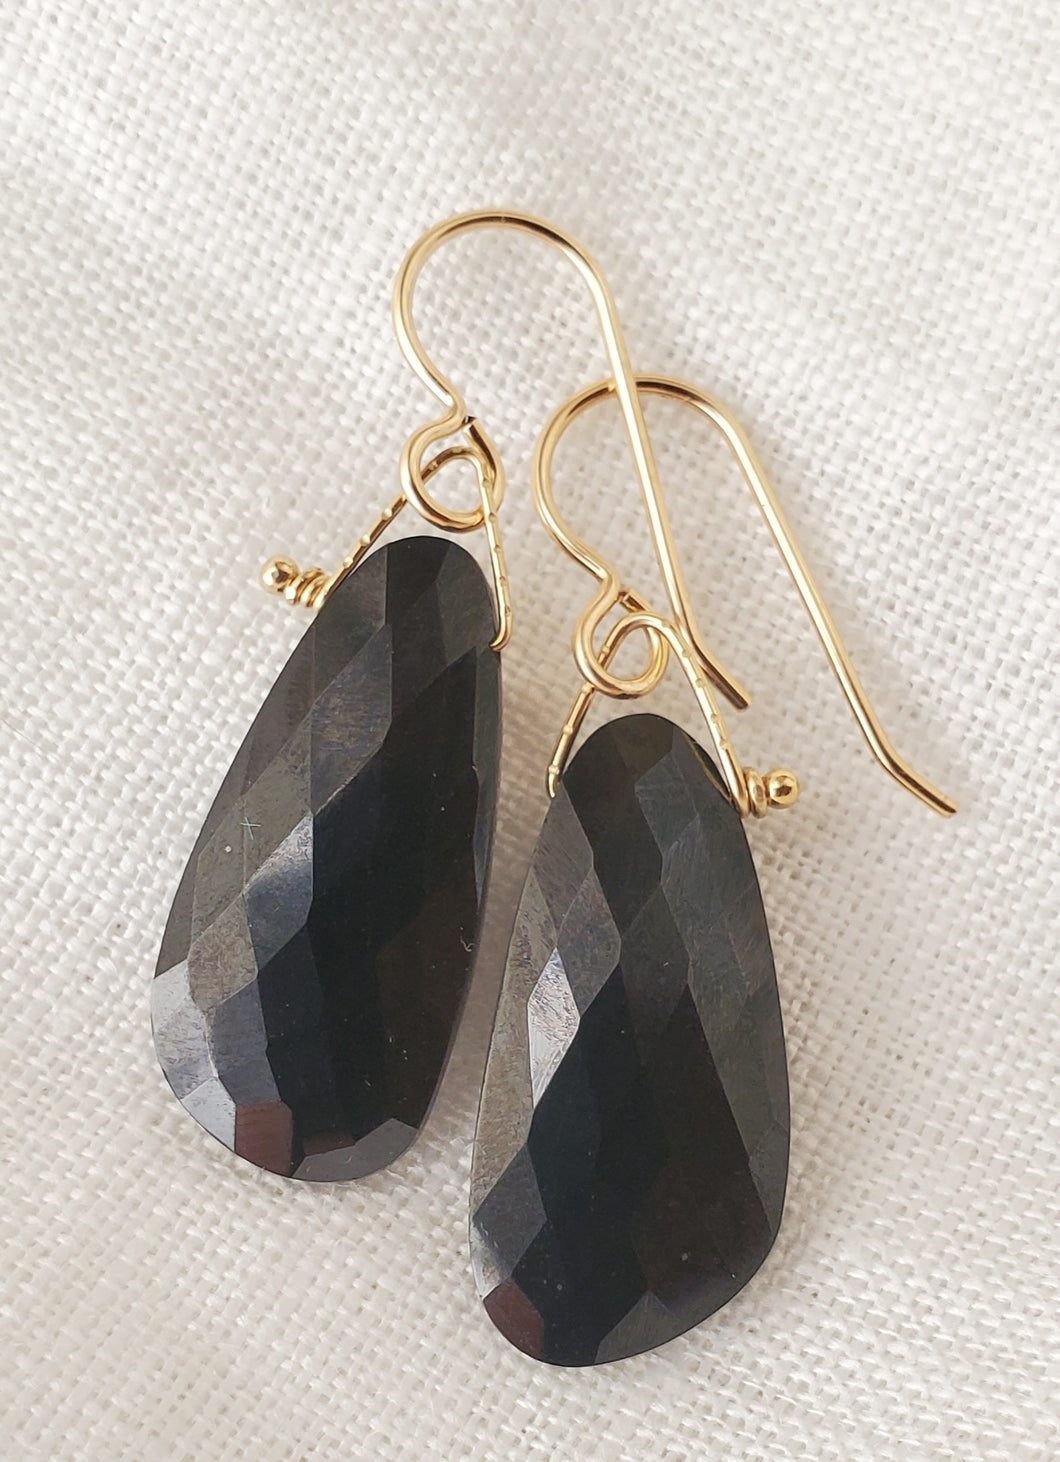 Simon & Lulu Black Spinel earrings